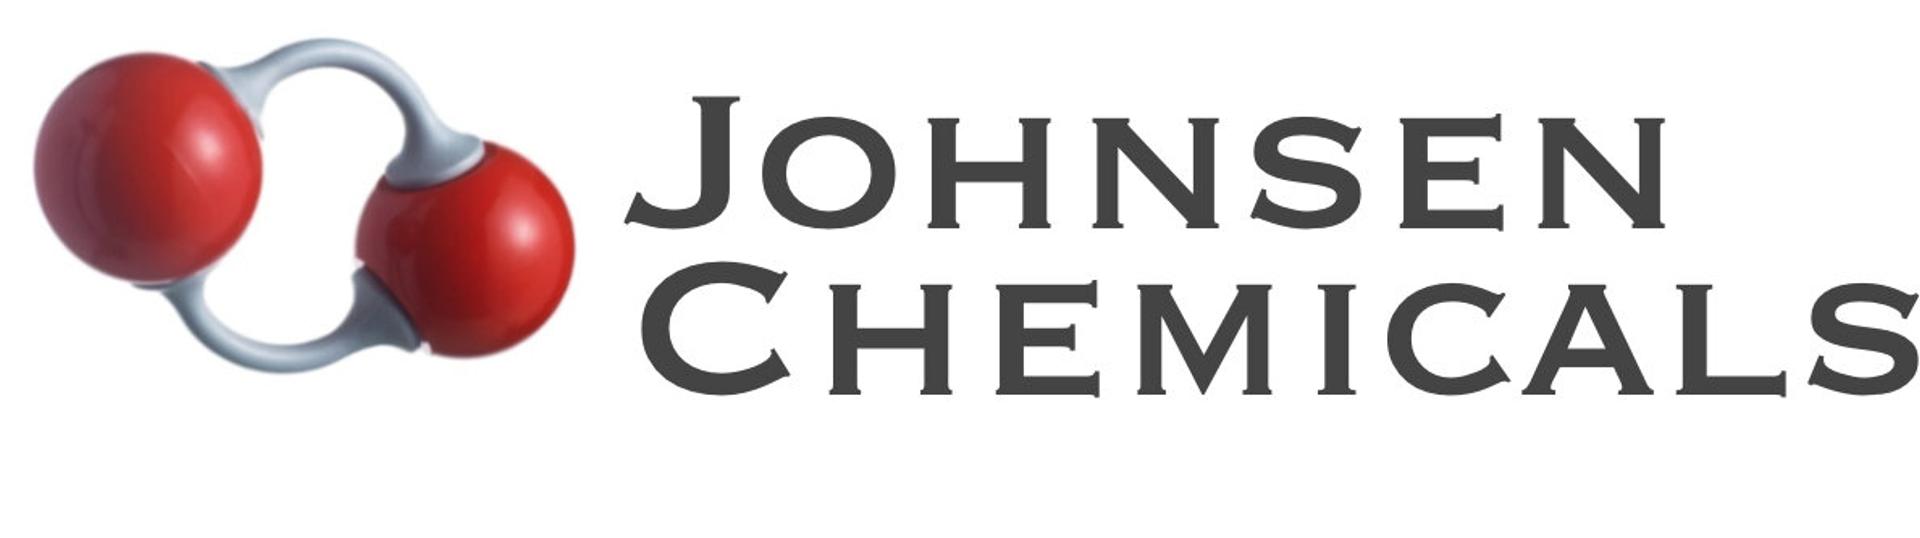 Johnsen Chemicals AS logo